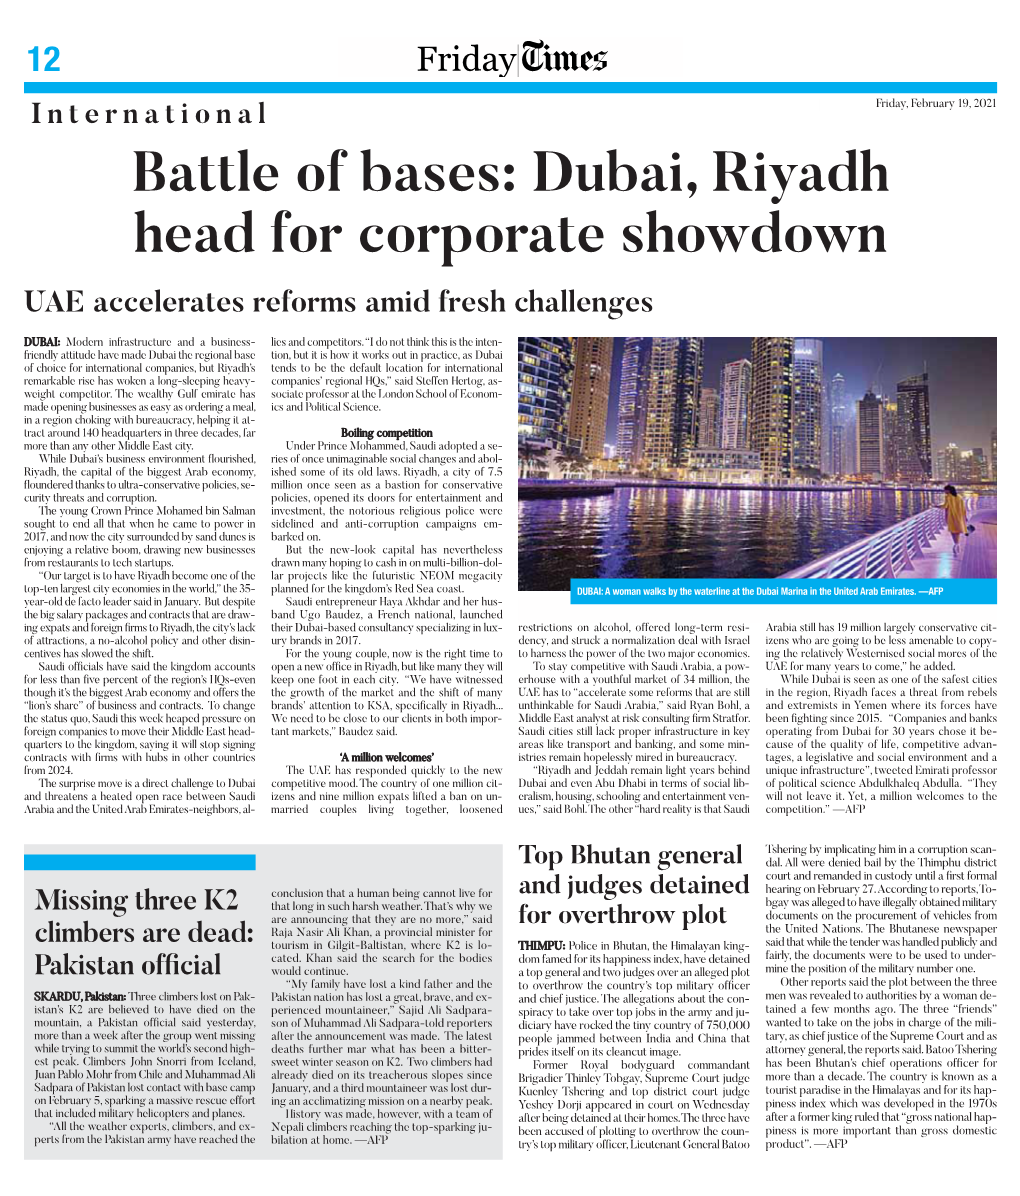 Battle of Bases: Dubai, Riyadh Head for Corporate Showdown UAE Accelerates Reforms Amid Fresh Challenges